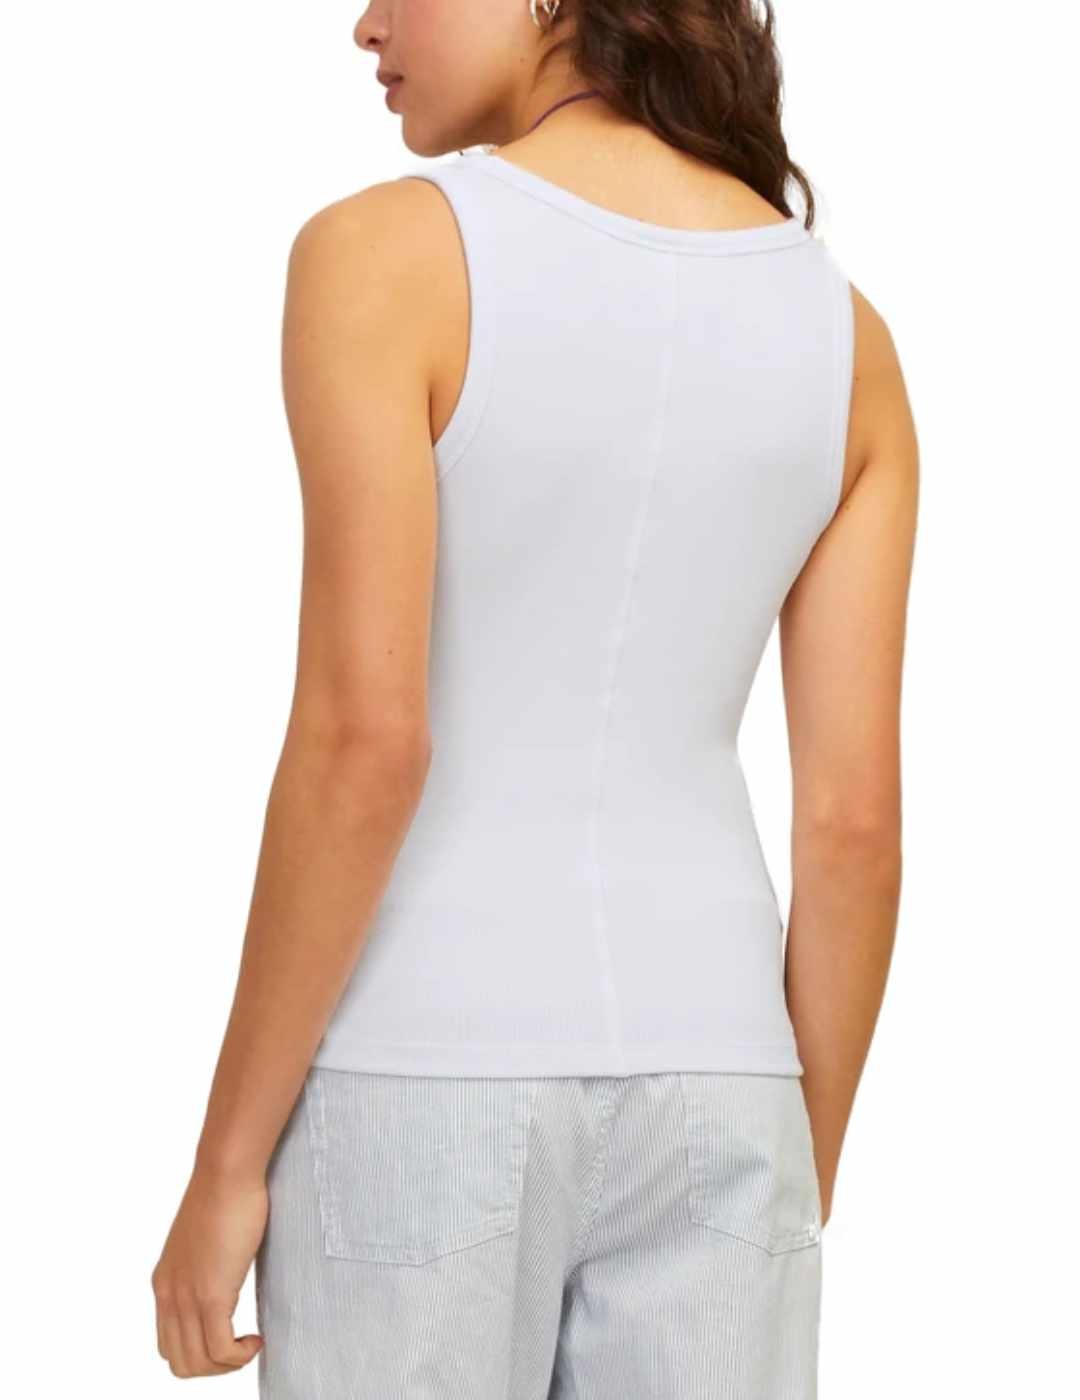 Camiseta básica JJXX Fera blanco de tirantes para mujer